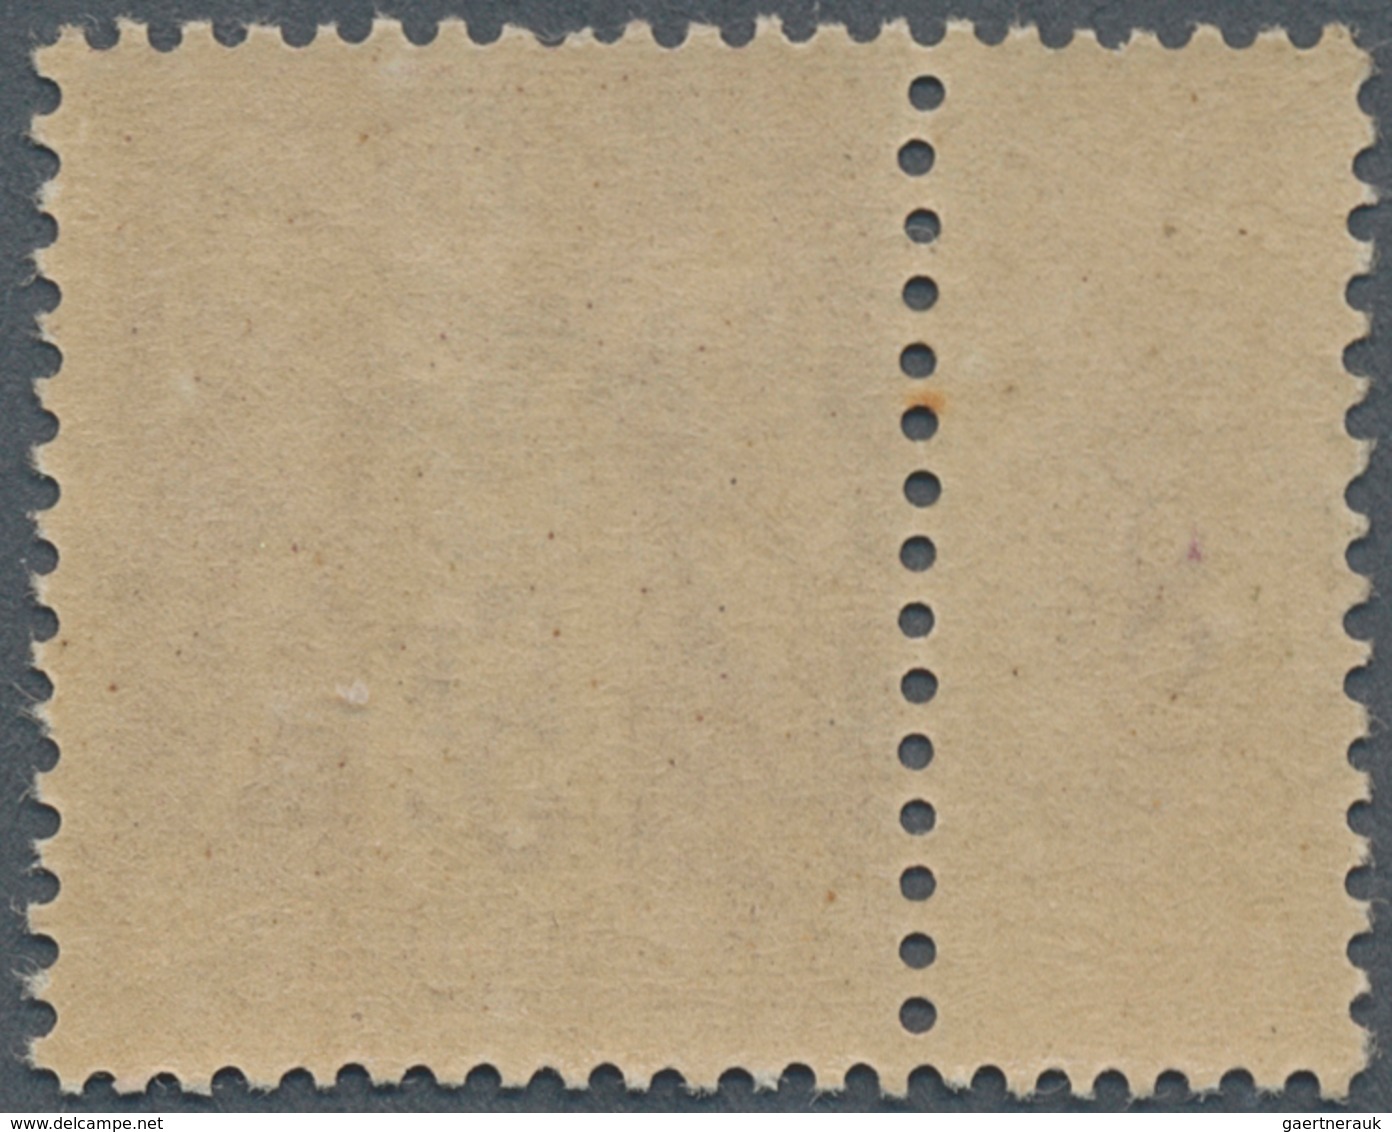 13666 Frankreich: 1877, 5 F Violet On Lilac Sage, With Gutter Margin "8" At Left. VF MNH Condition. - Gebraucht